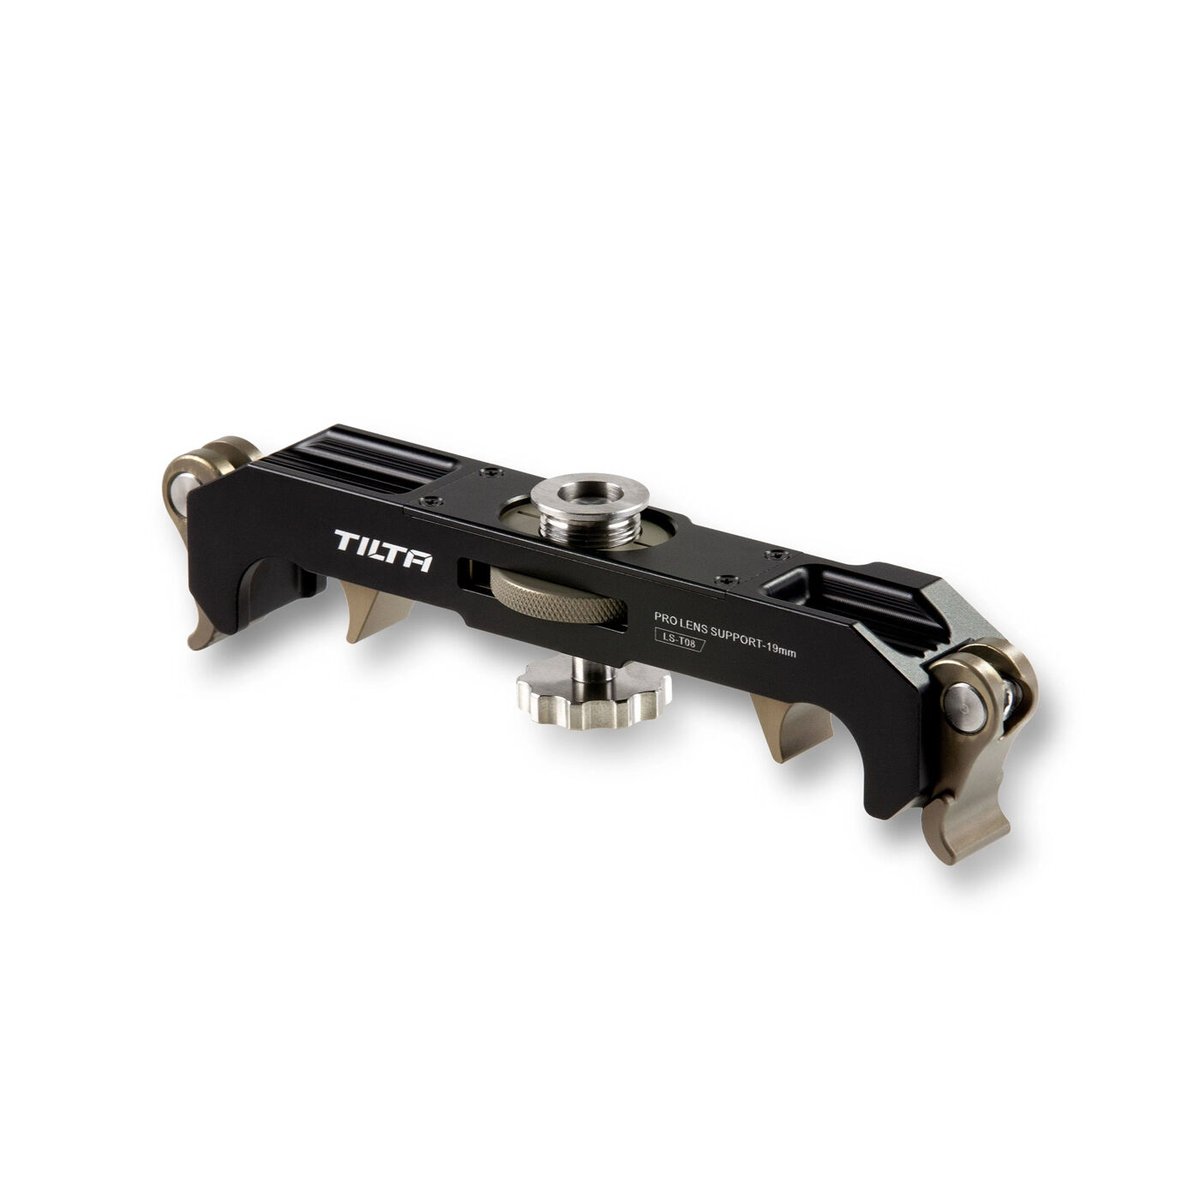 19mm Pro Lens Support (LS-T08) | TILTA ONLINE S...